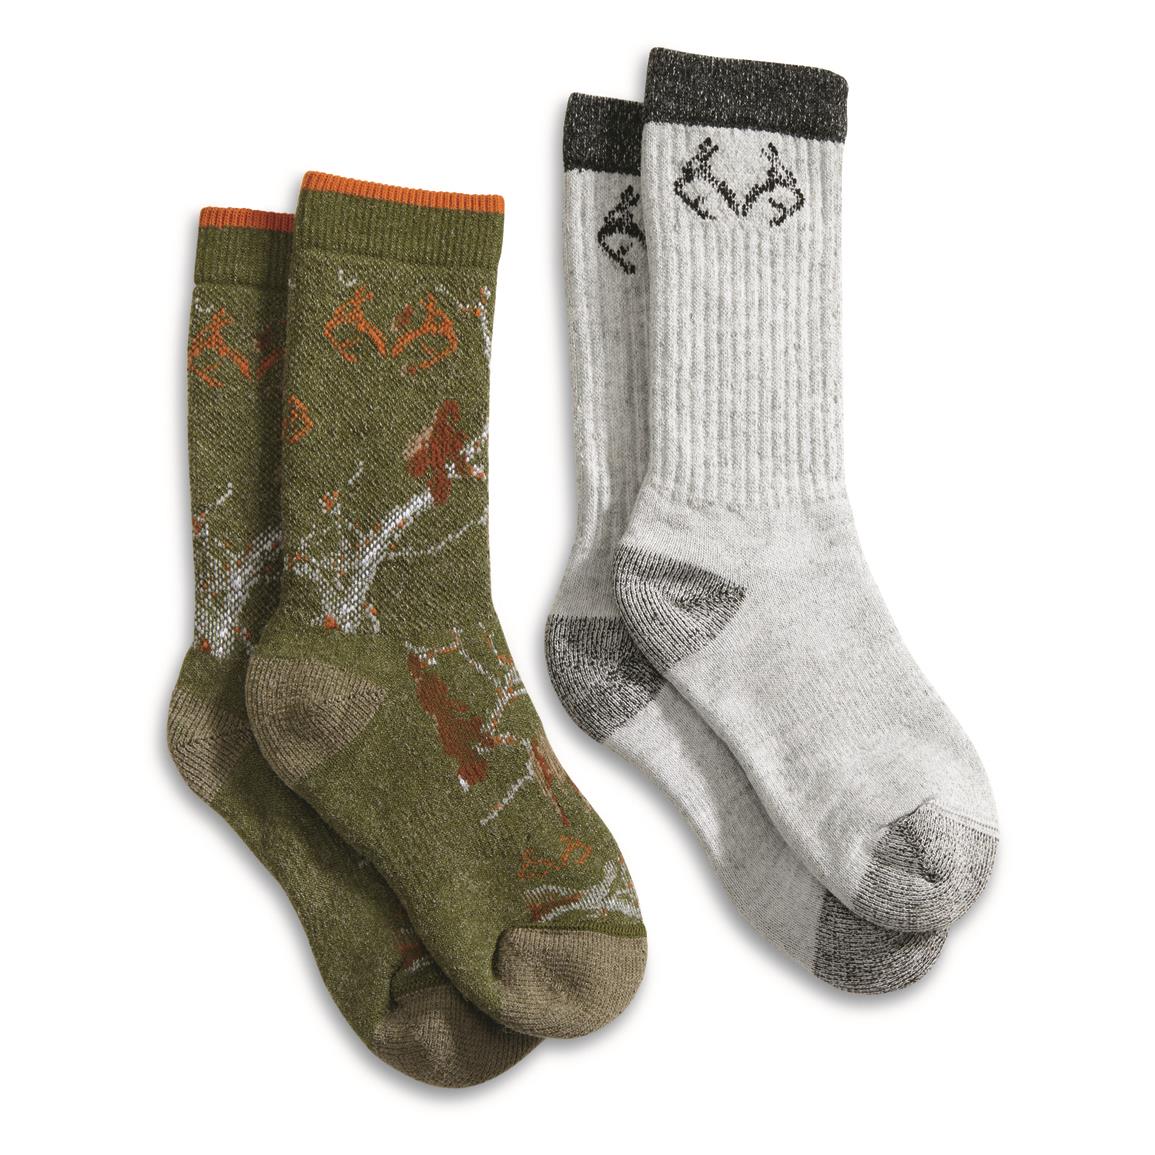 Kids' Realtree Wool Blend Boot Socks, 2 Pairs, Olive Camo/grey